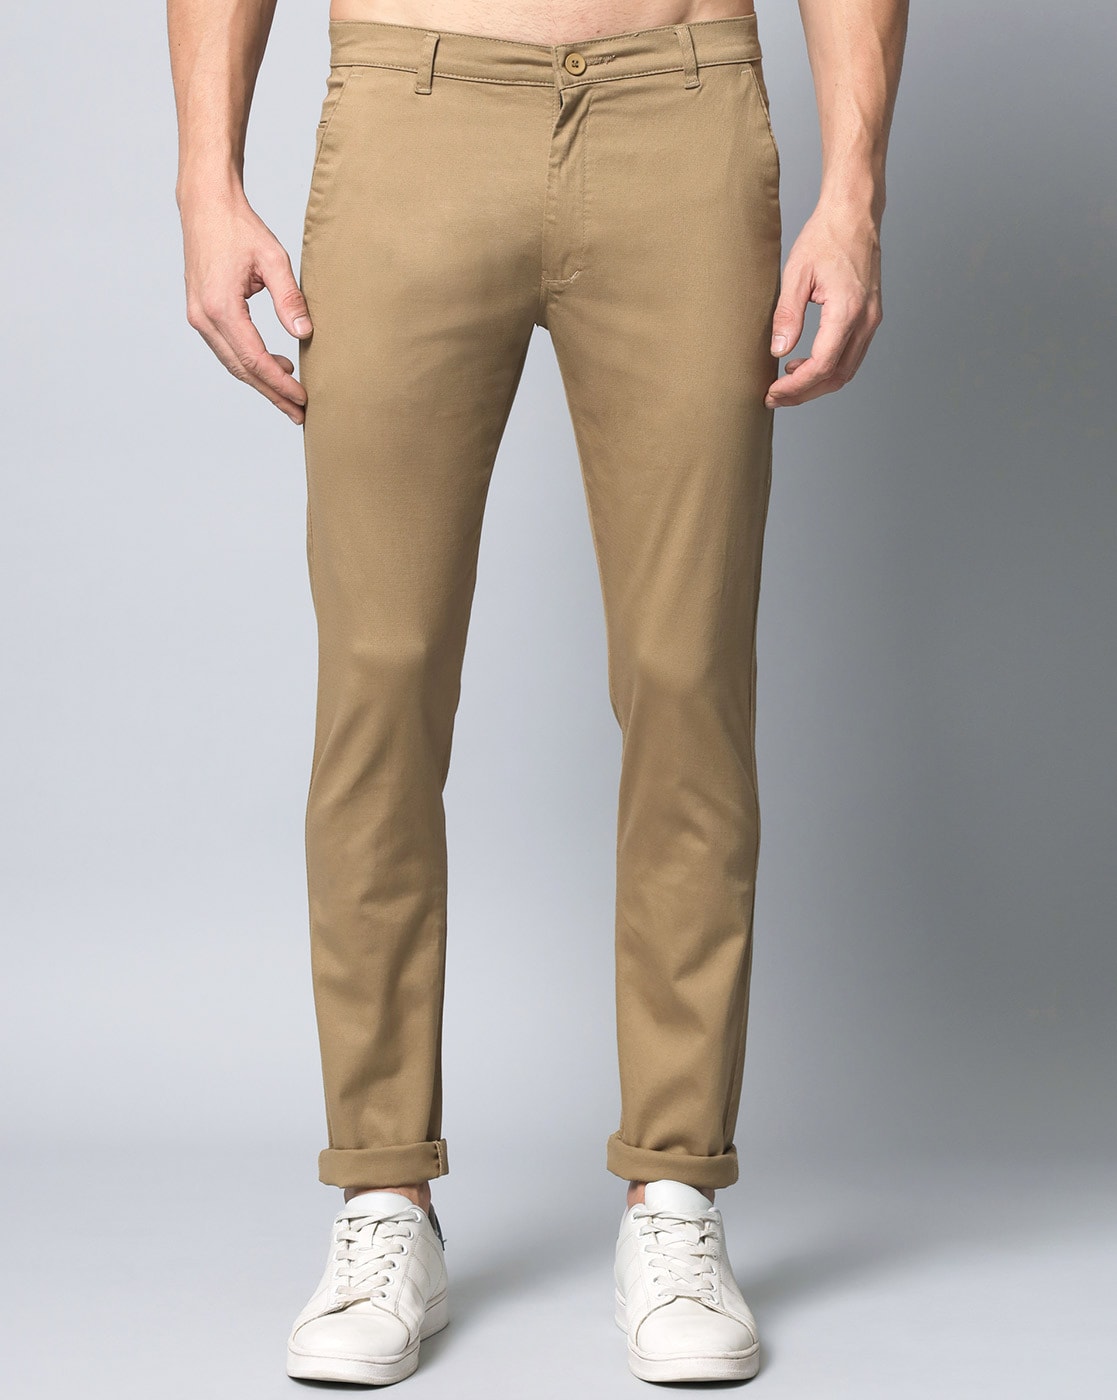 Buy Off Duty India Khaki Baggy Fit Straight Leg Jeans Khaki online